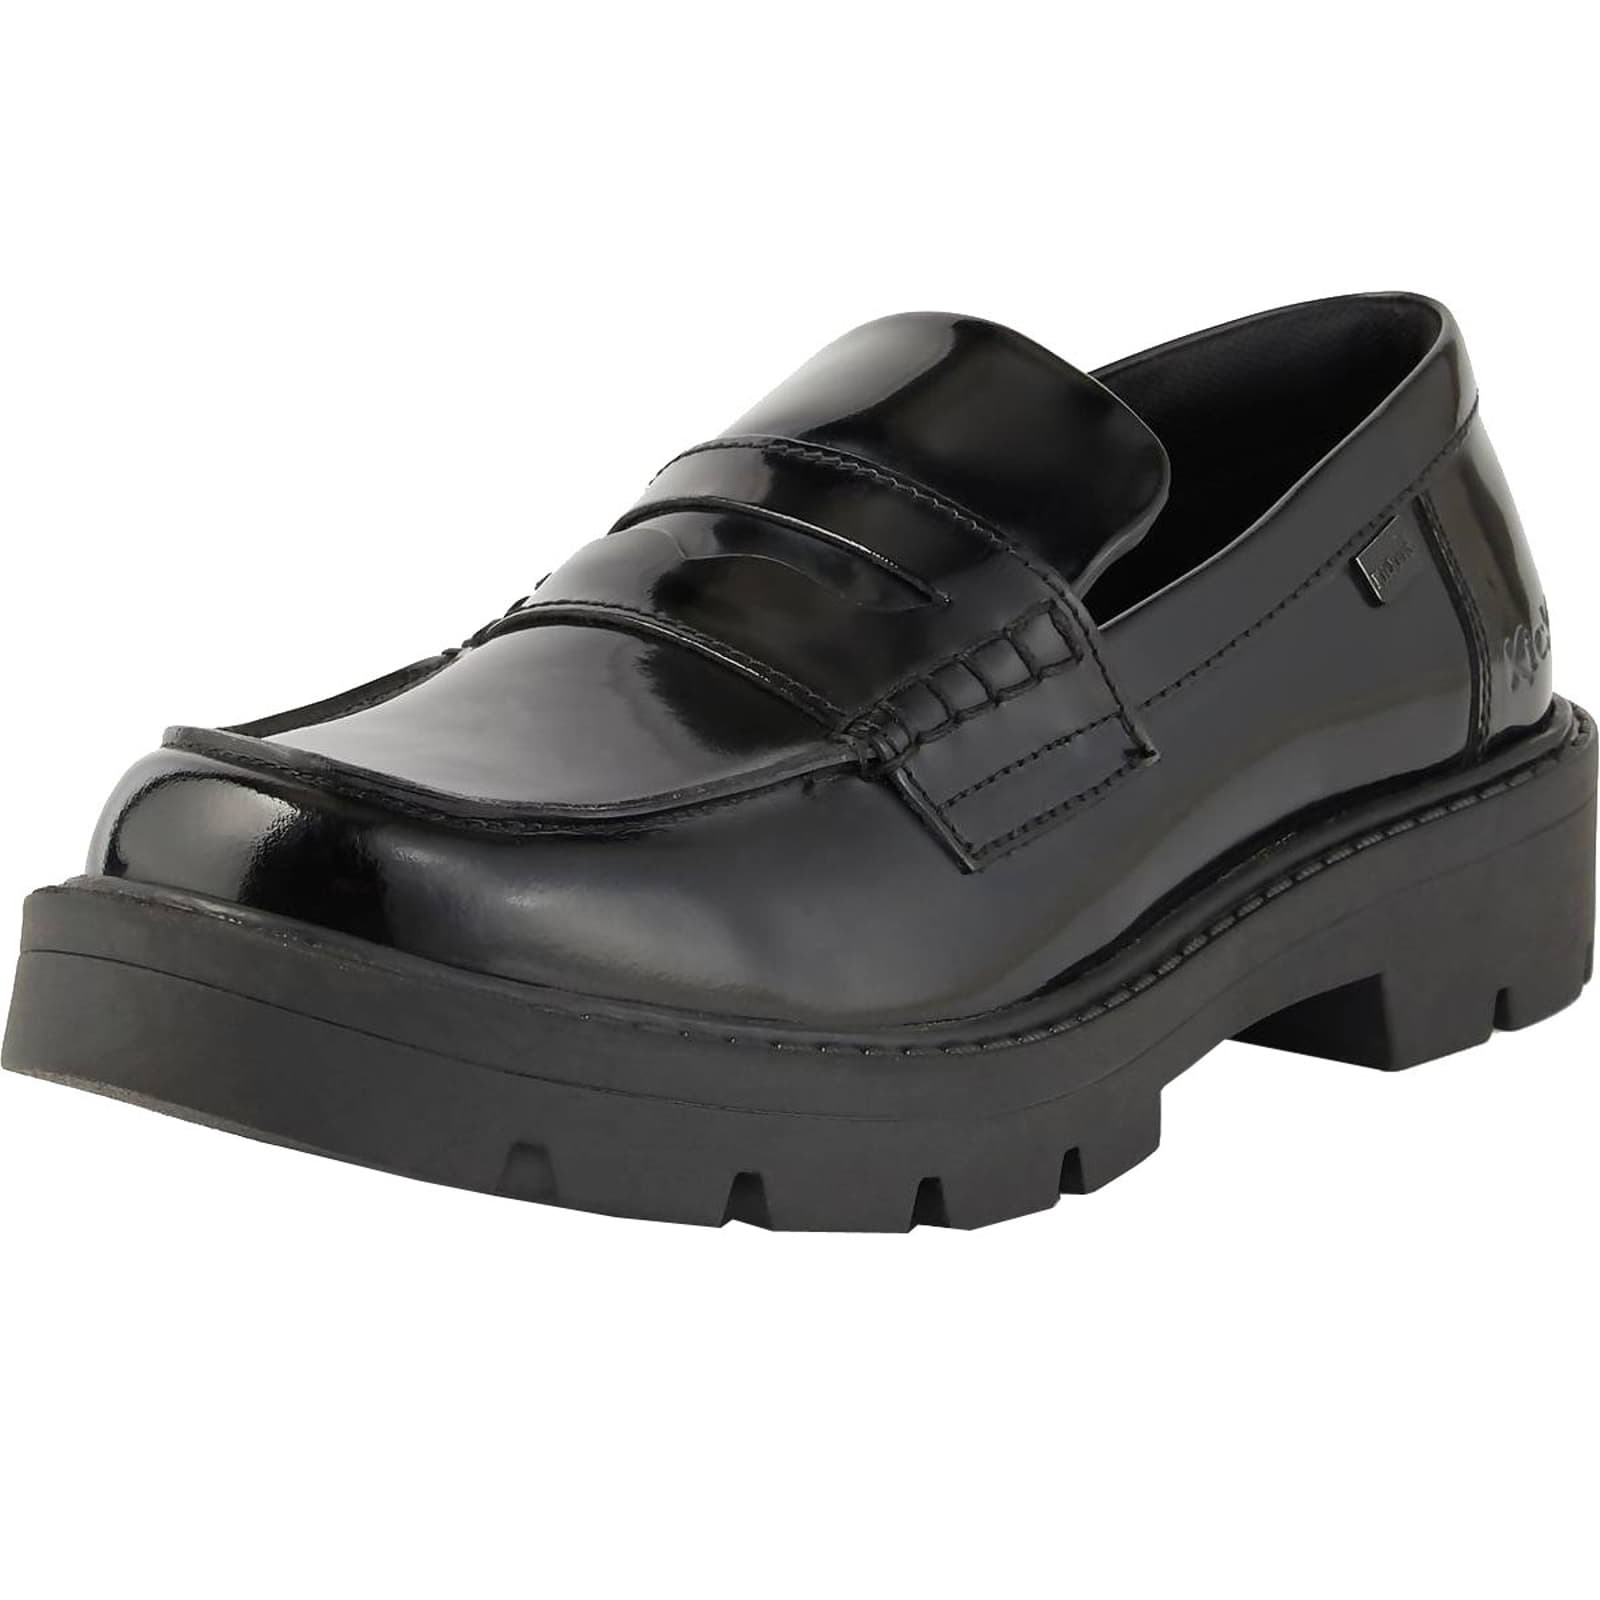 Kickers Women's Kori Loafer Leather Shoes  - UK 4 / EU 37